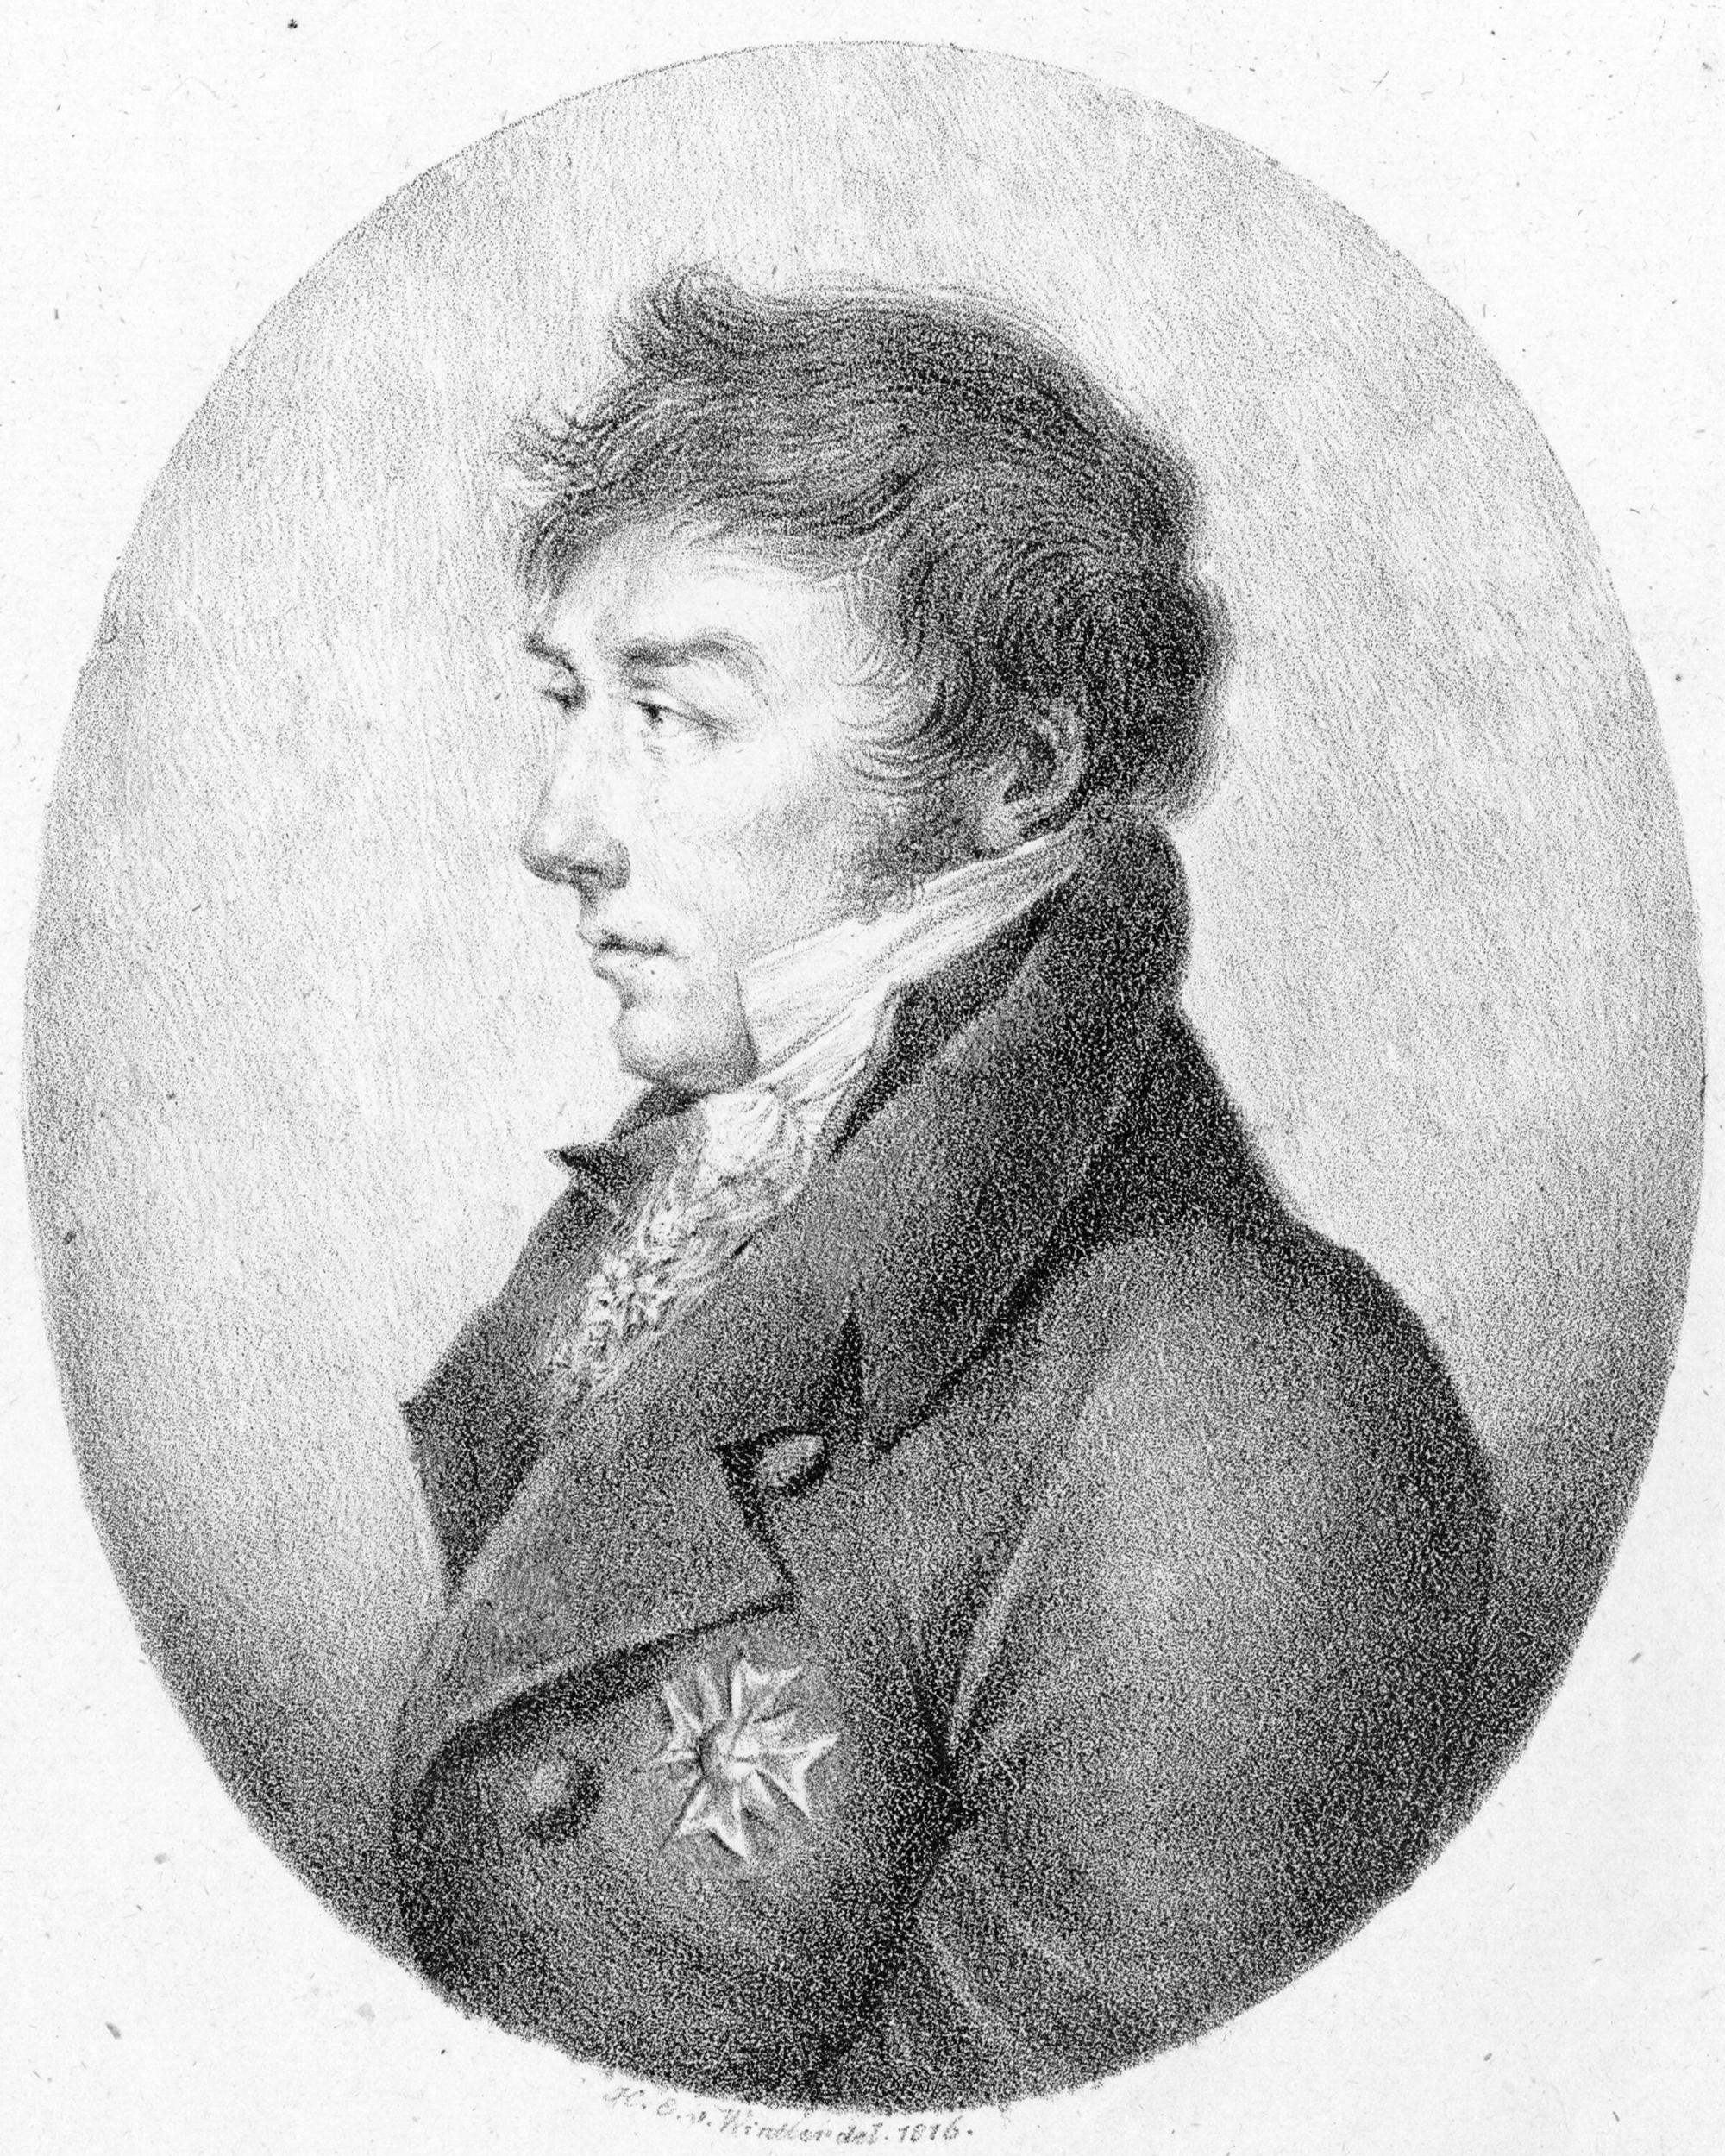 Johann Nepomuk von Poißl